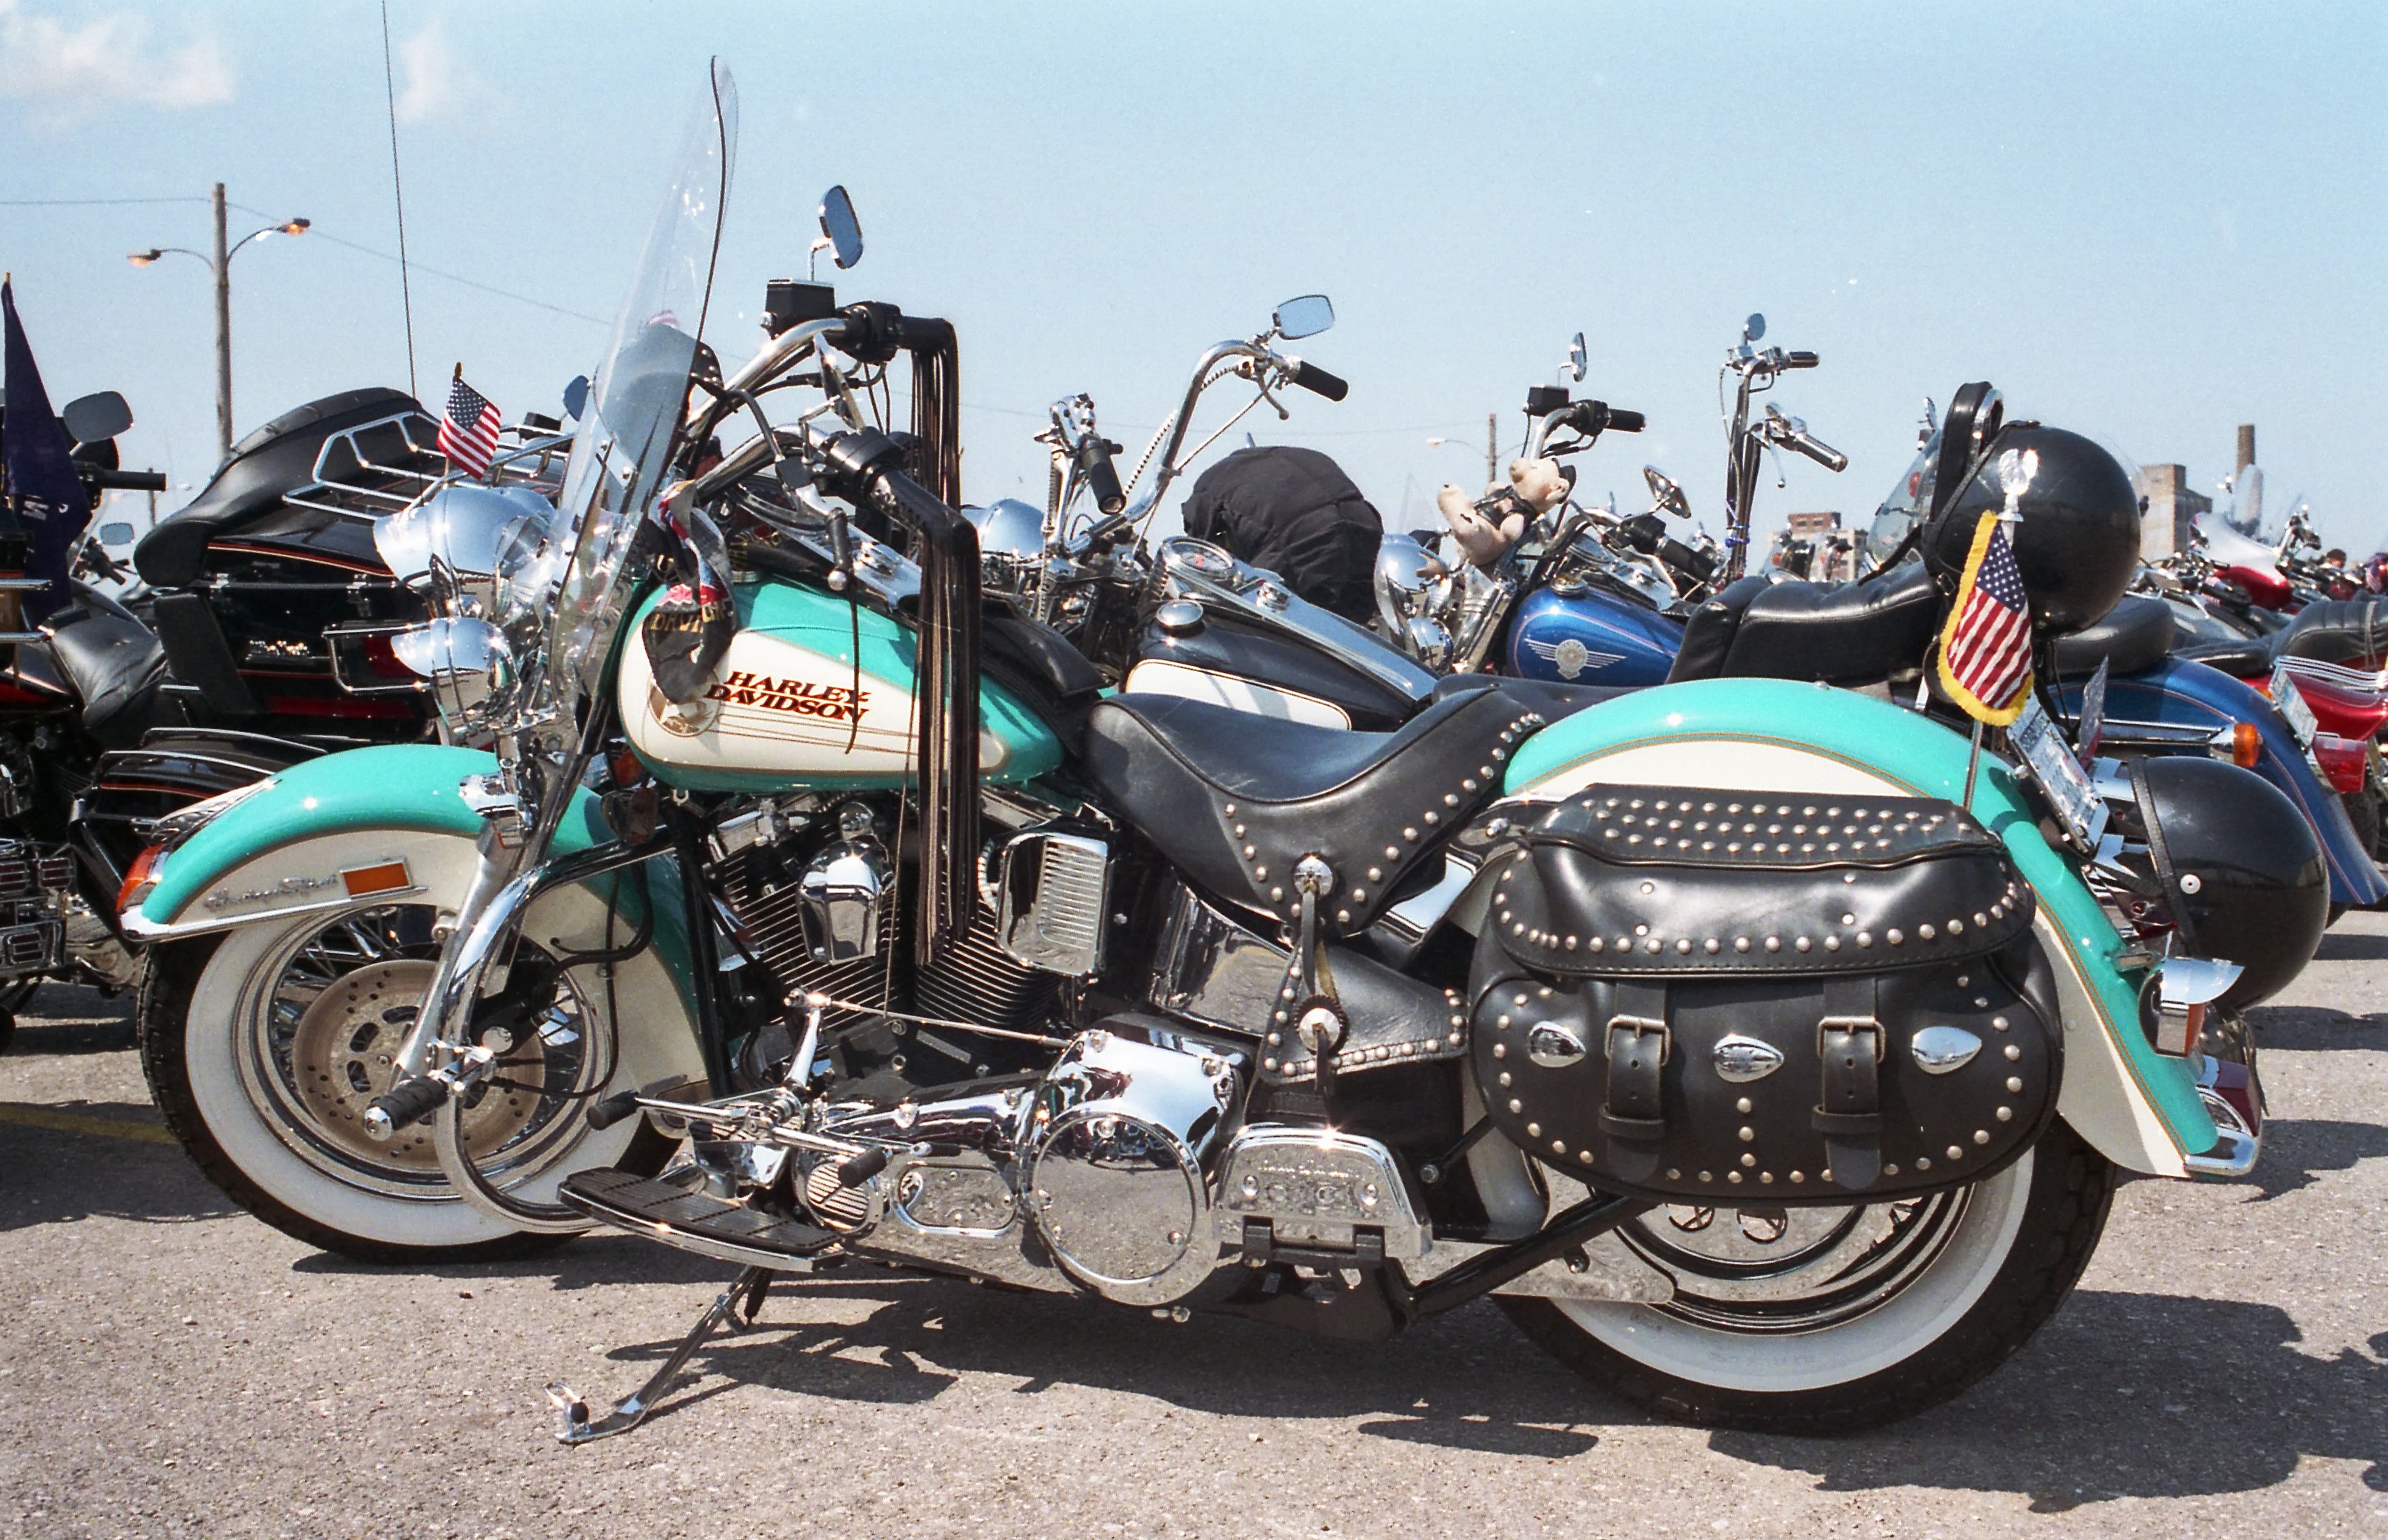 Descubra se comprar motos customizadas usadas vale a pena. Fonte: Unsplash.